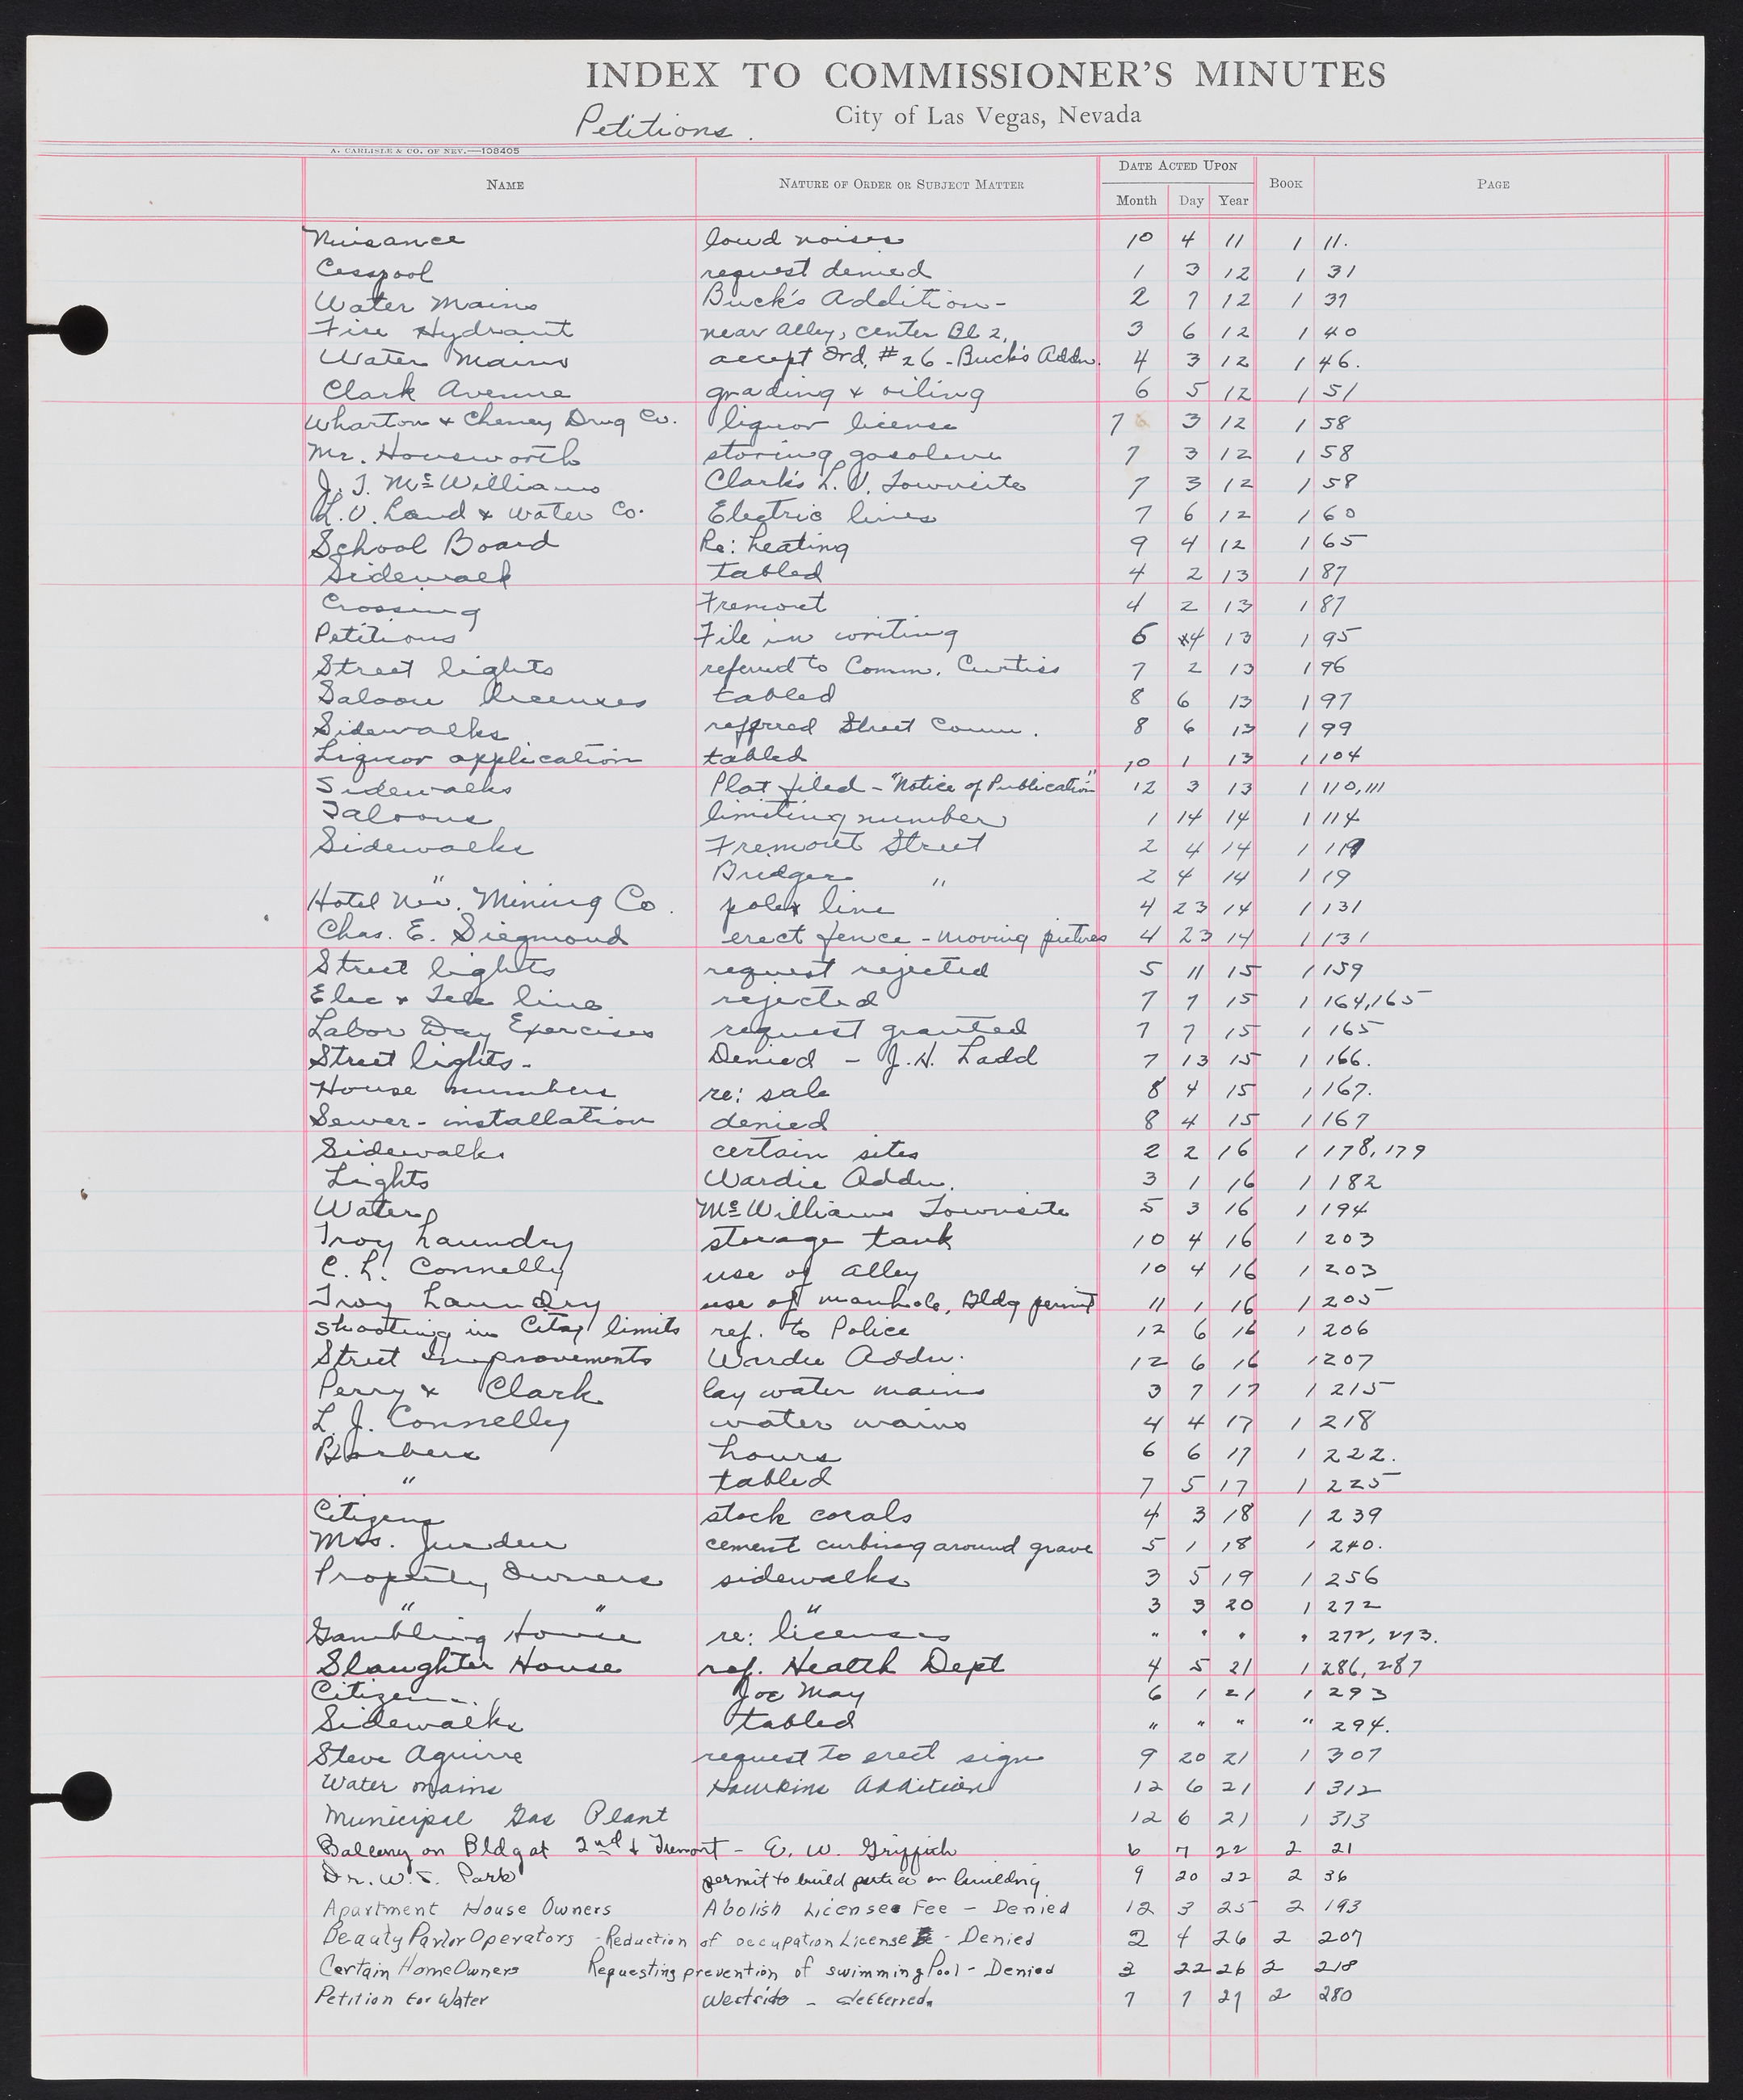 Las Vegas City Commission Minutes Index 1, 1911-1960: documents, item 211